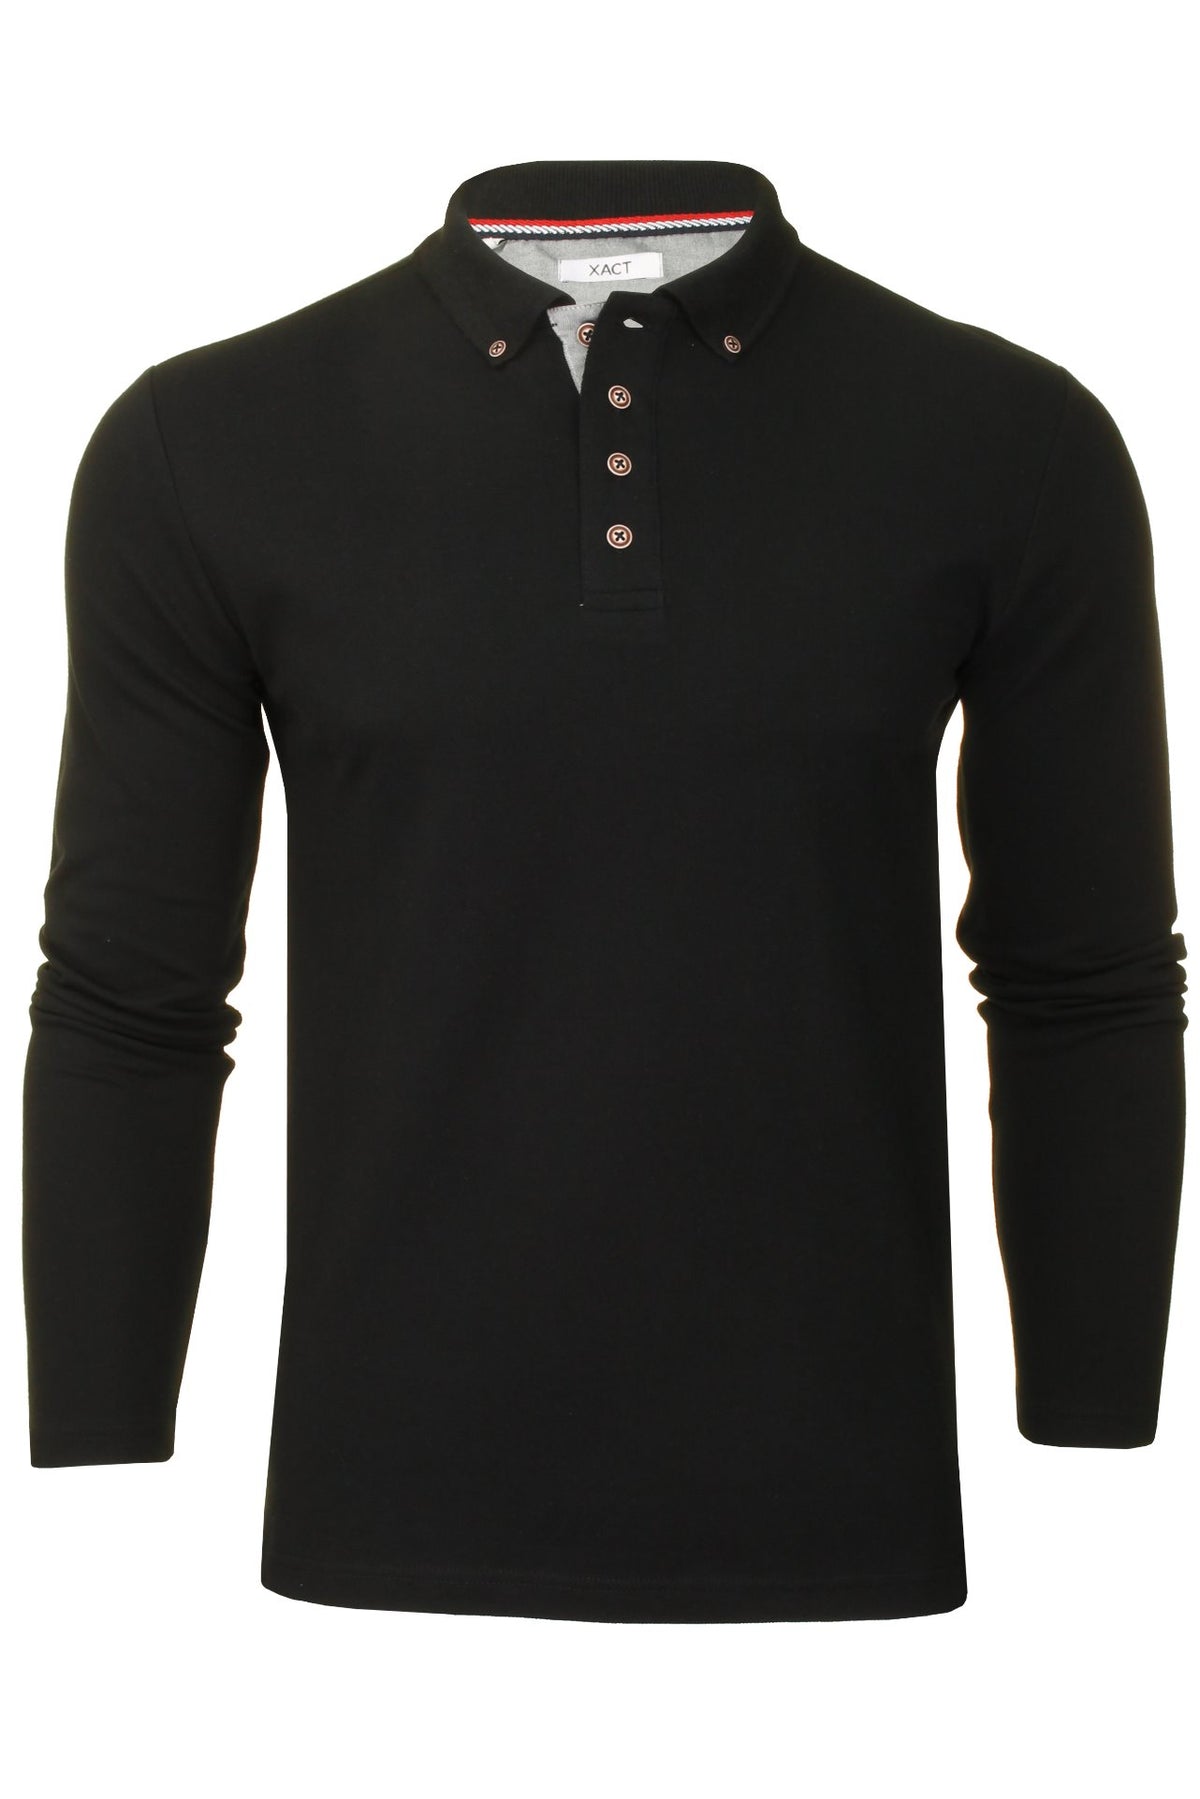 Xact Mens Polo T-Shirt Pique Long Sleeved, 01, XP1003, Jet Black